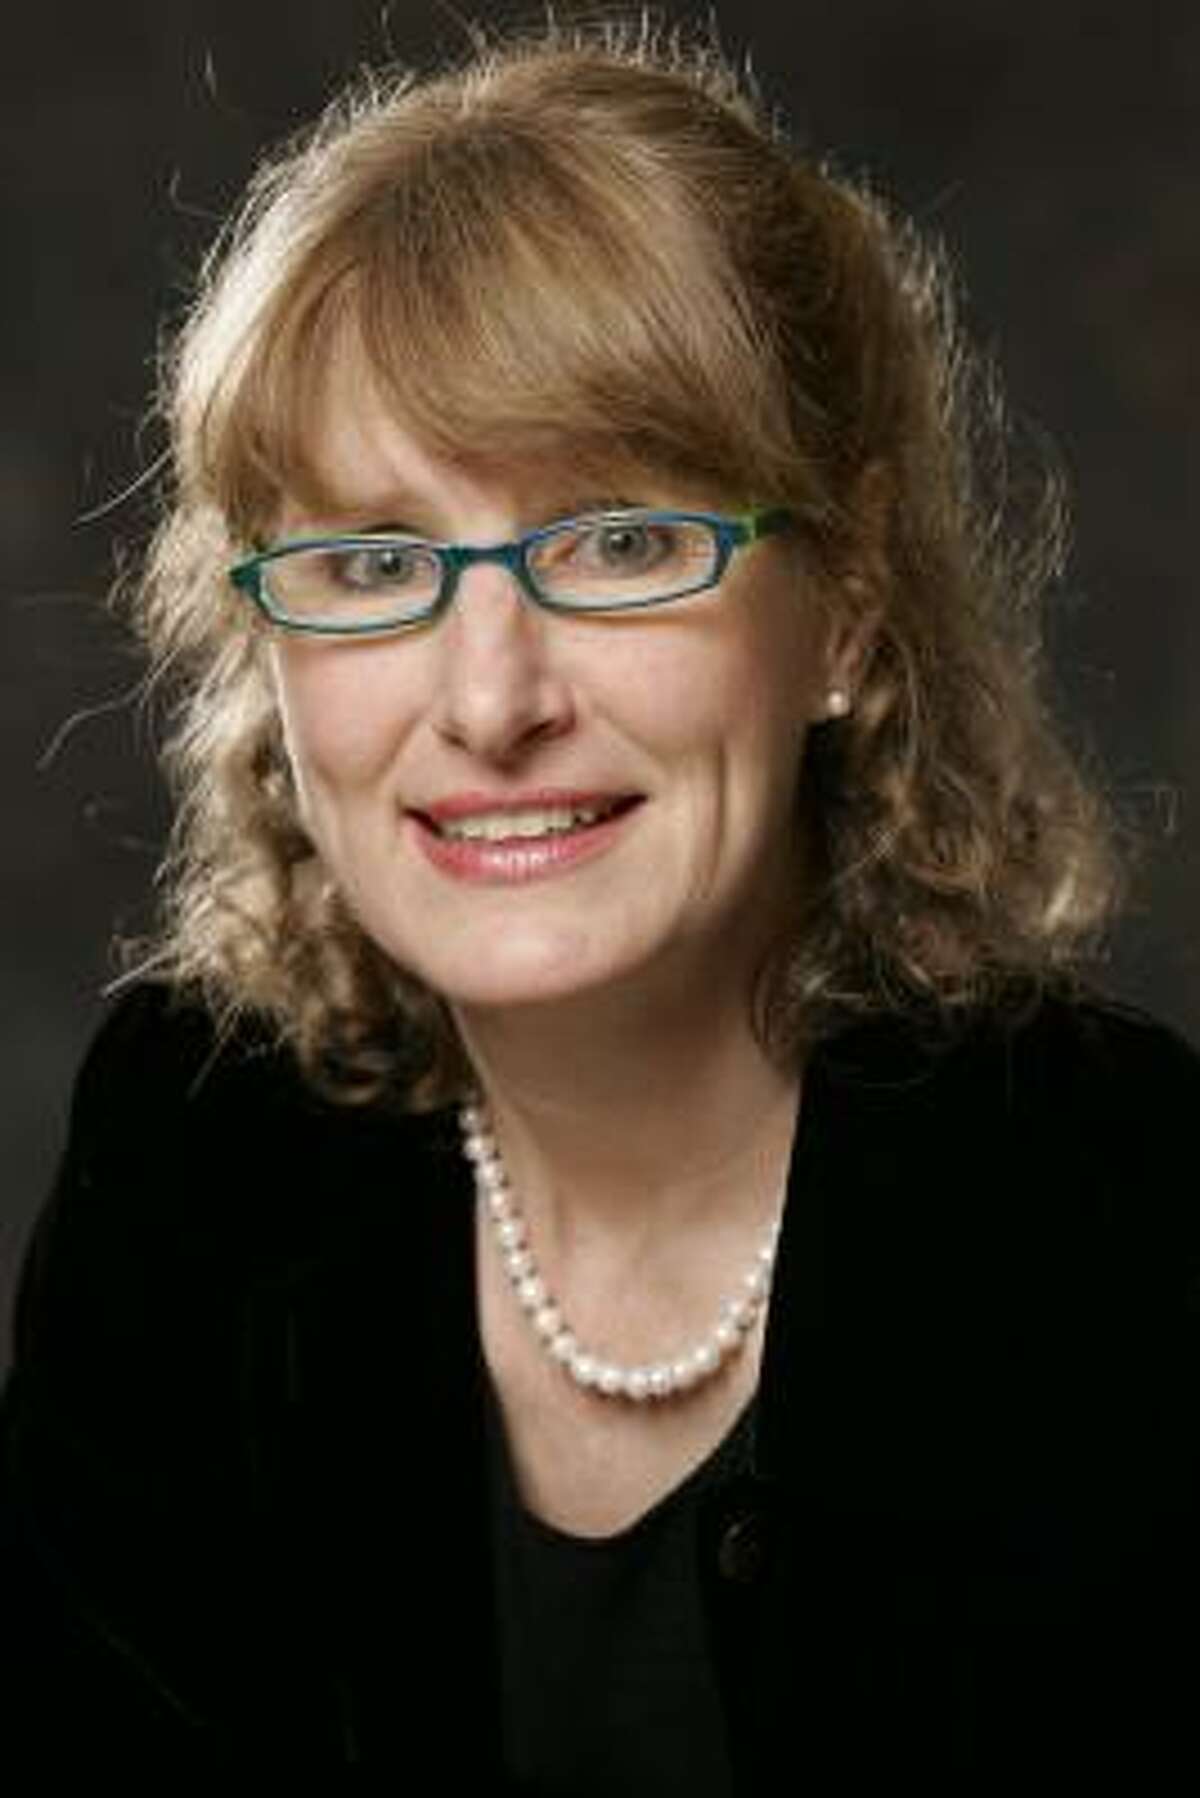 Elizabeth Gregory is director of the women's studies program at the University of Houston.